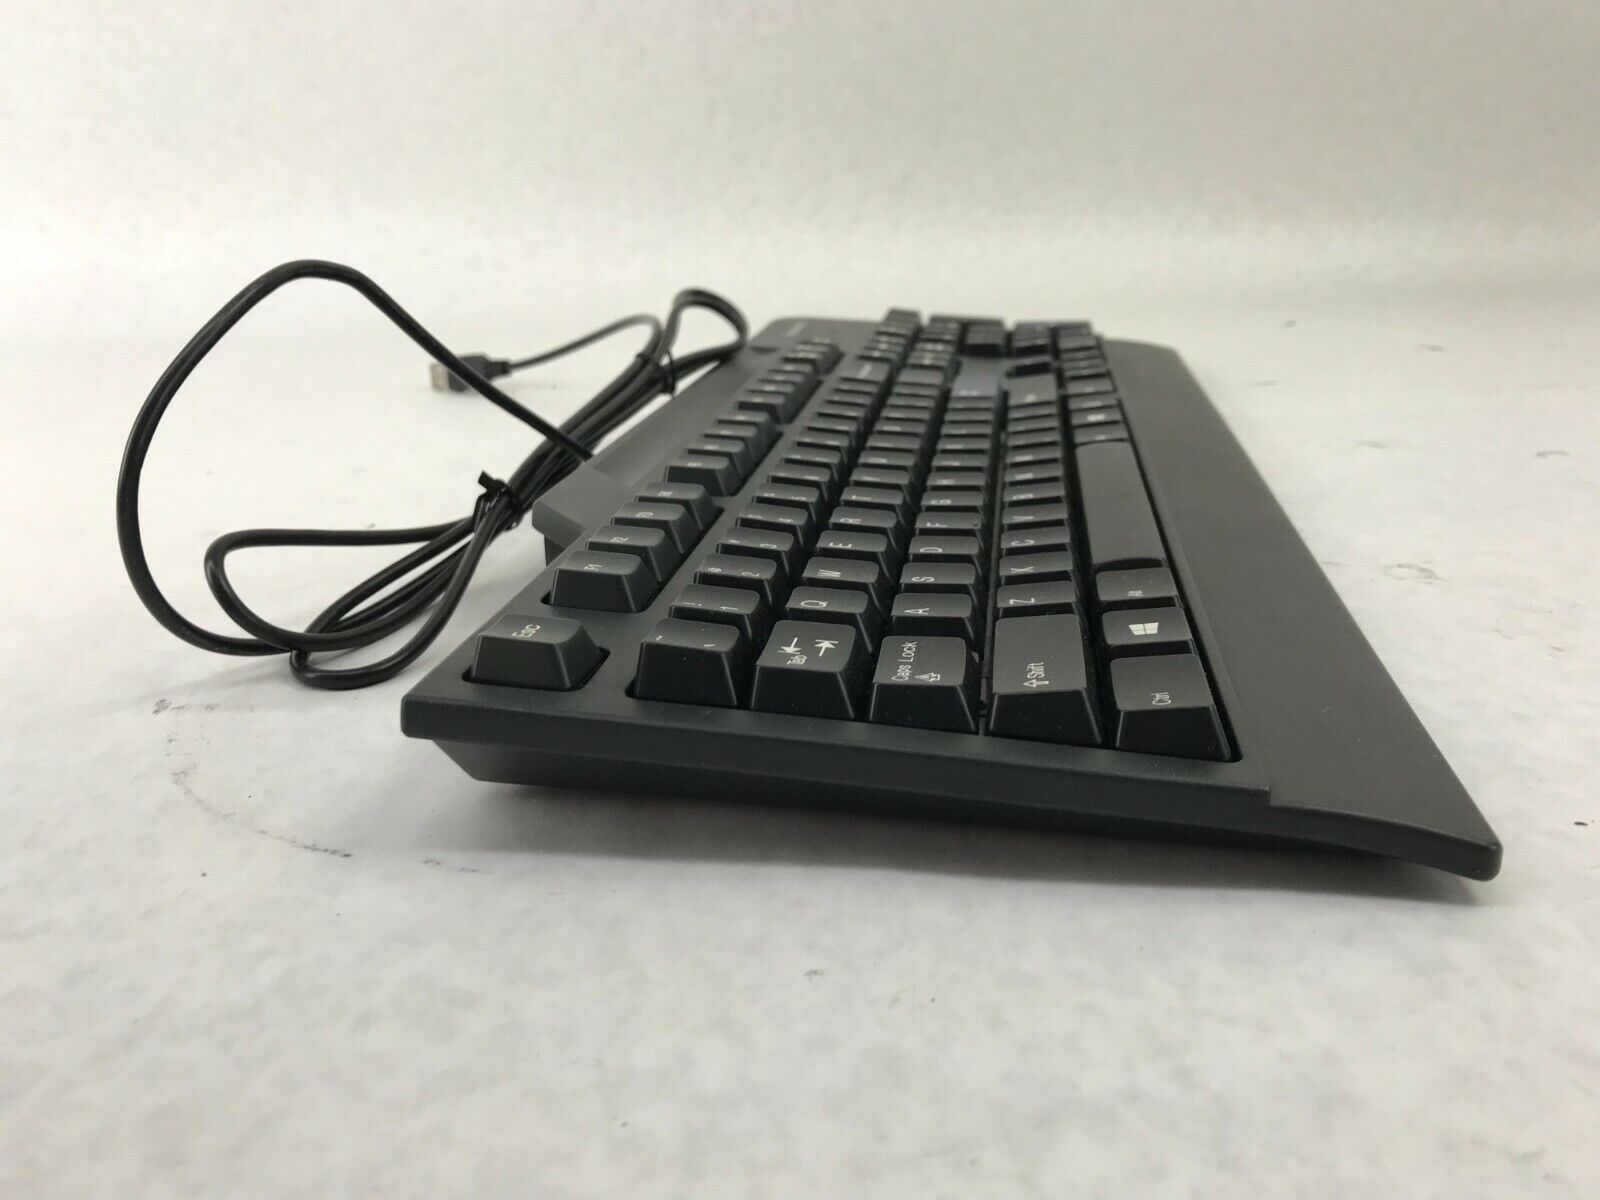 Lenovo USB Keyboard Model KU-0225 Lot of 19